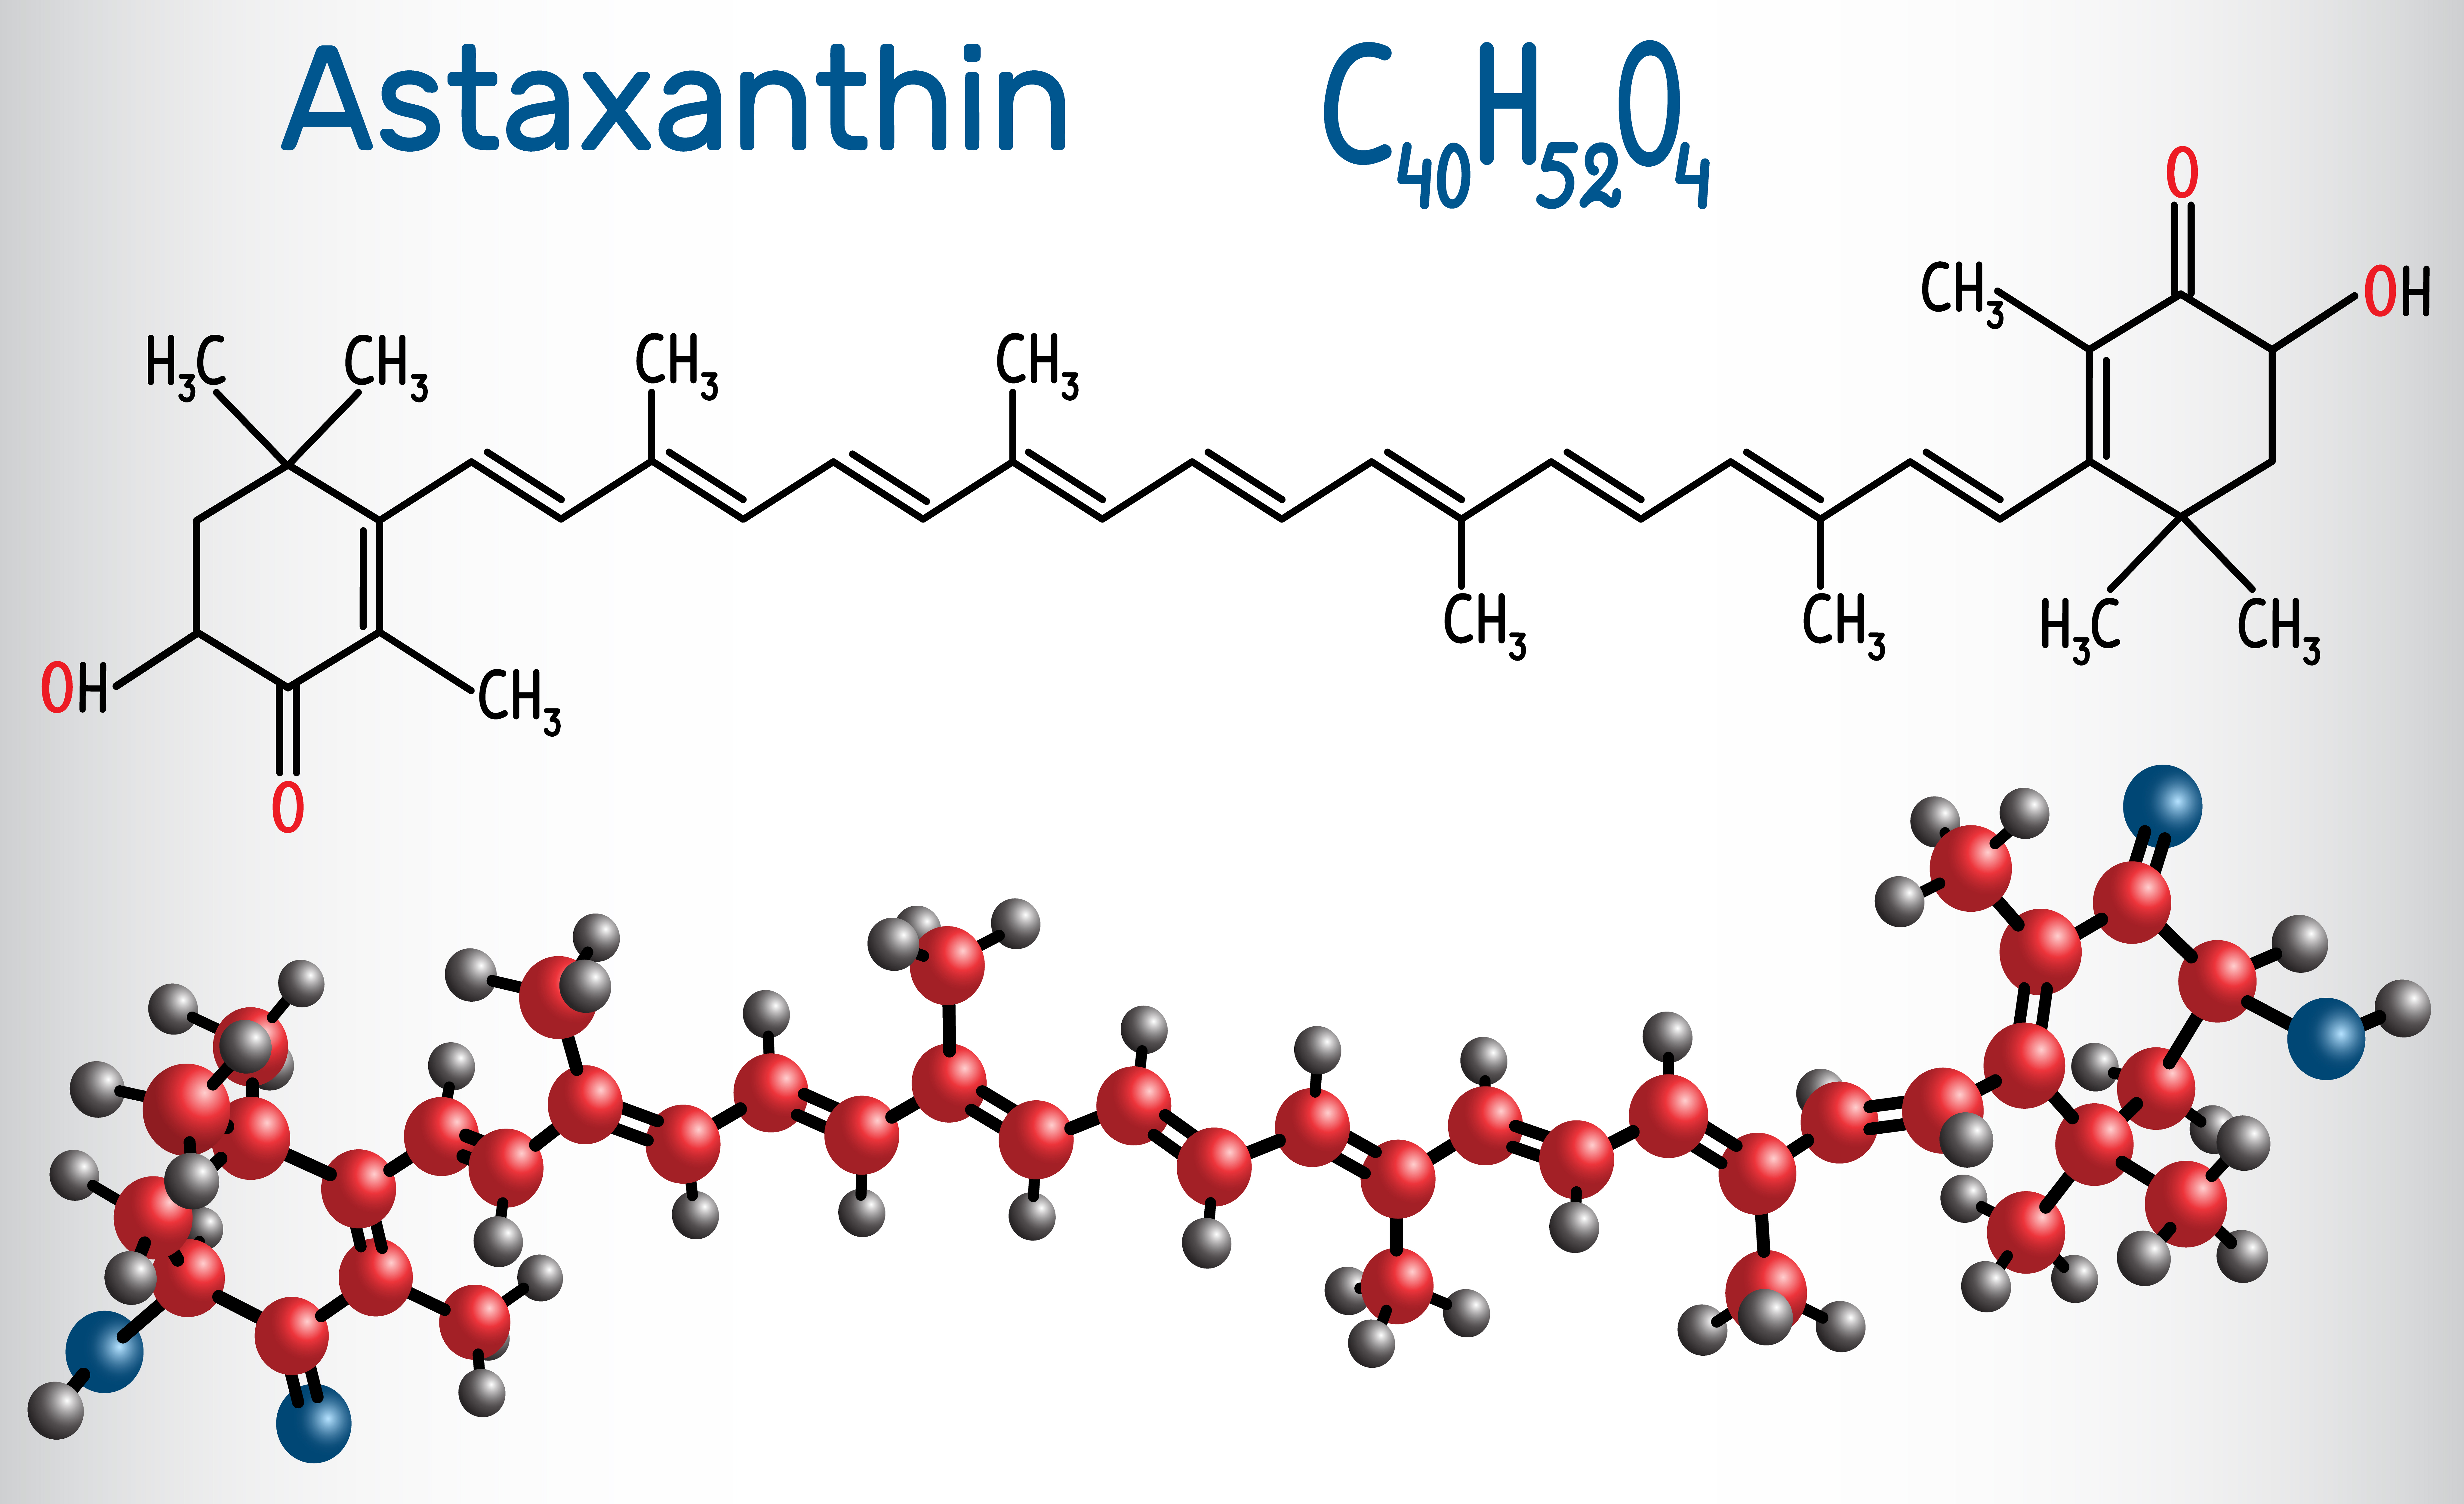 Astaxanthin chemical formulation